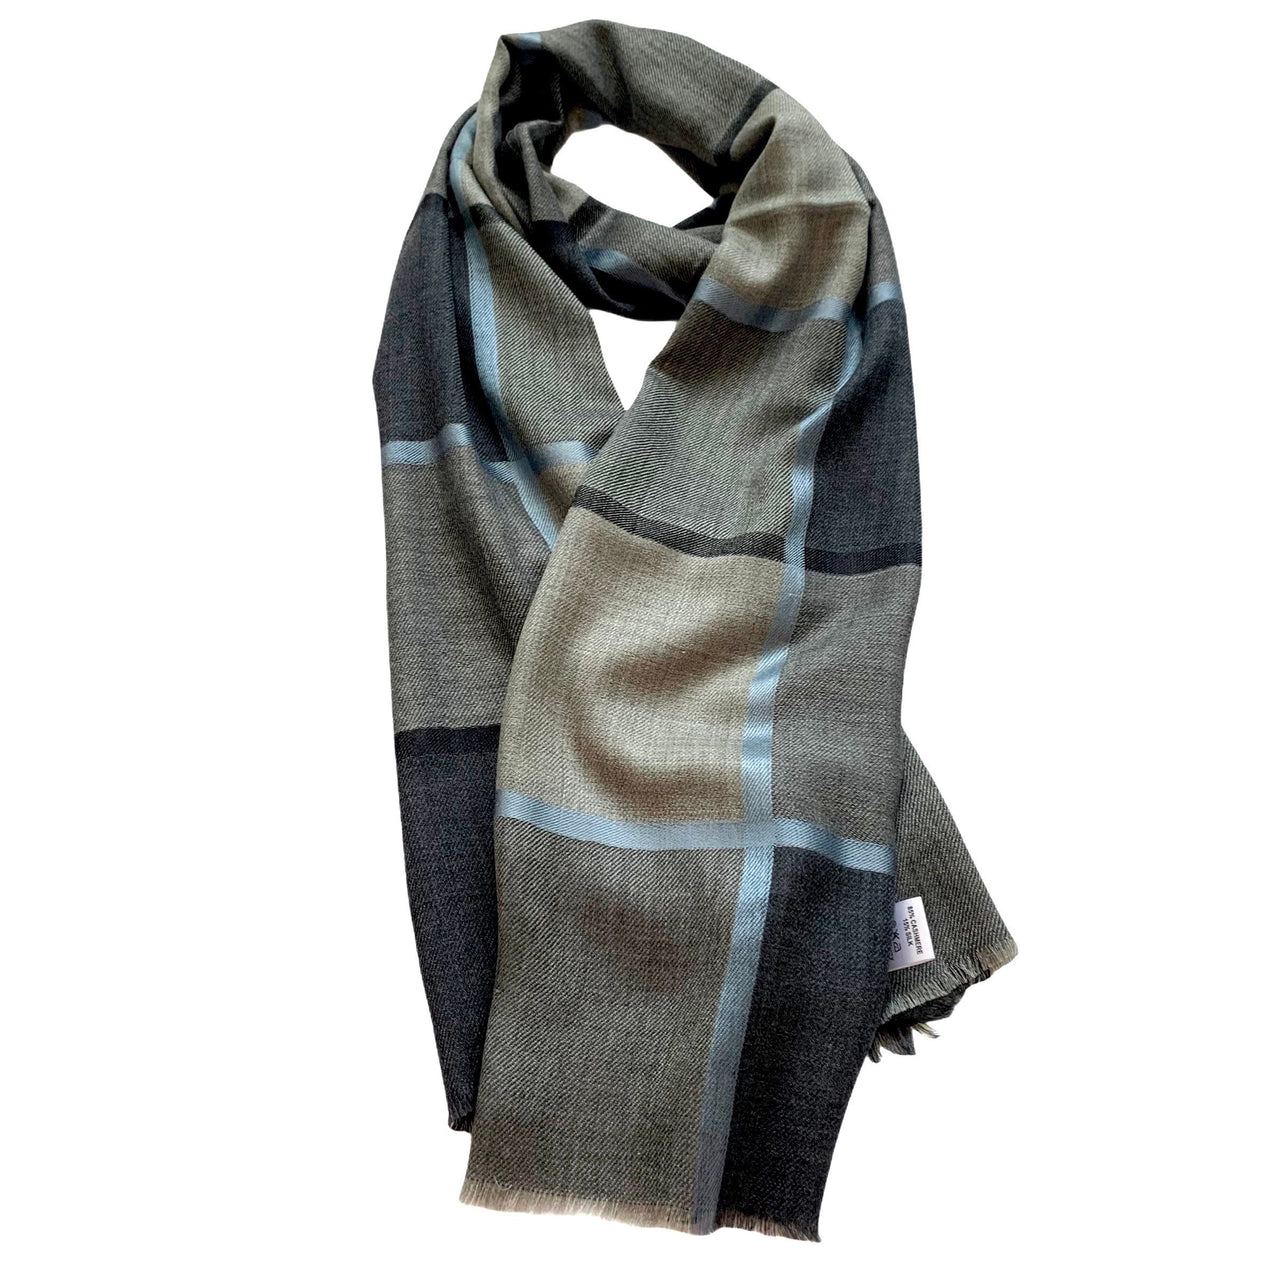 Cashmere Silk Grey/Charcoal unisex Scarf/Shawl/Wrap/Stole 28x76 inches